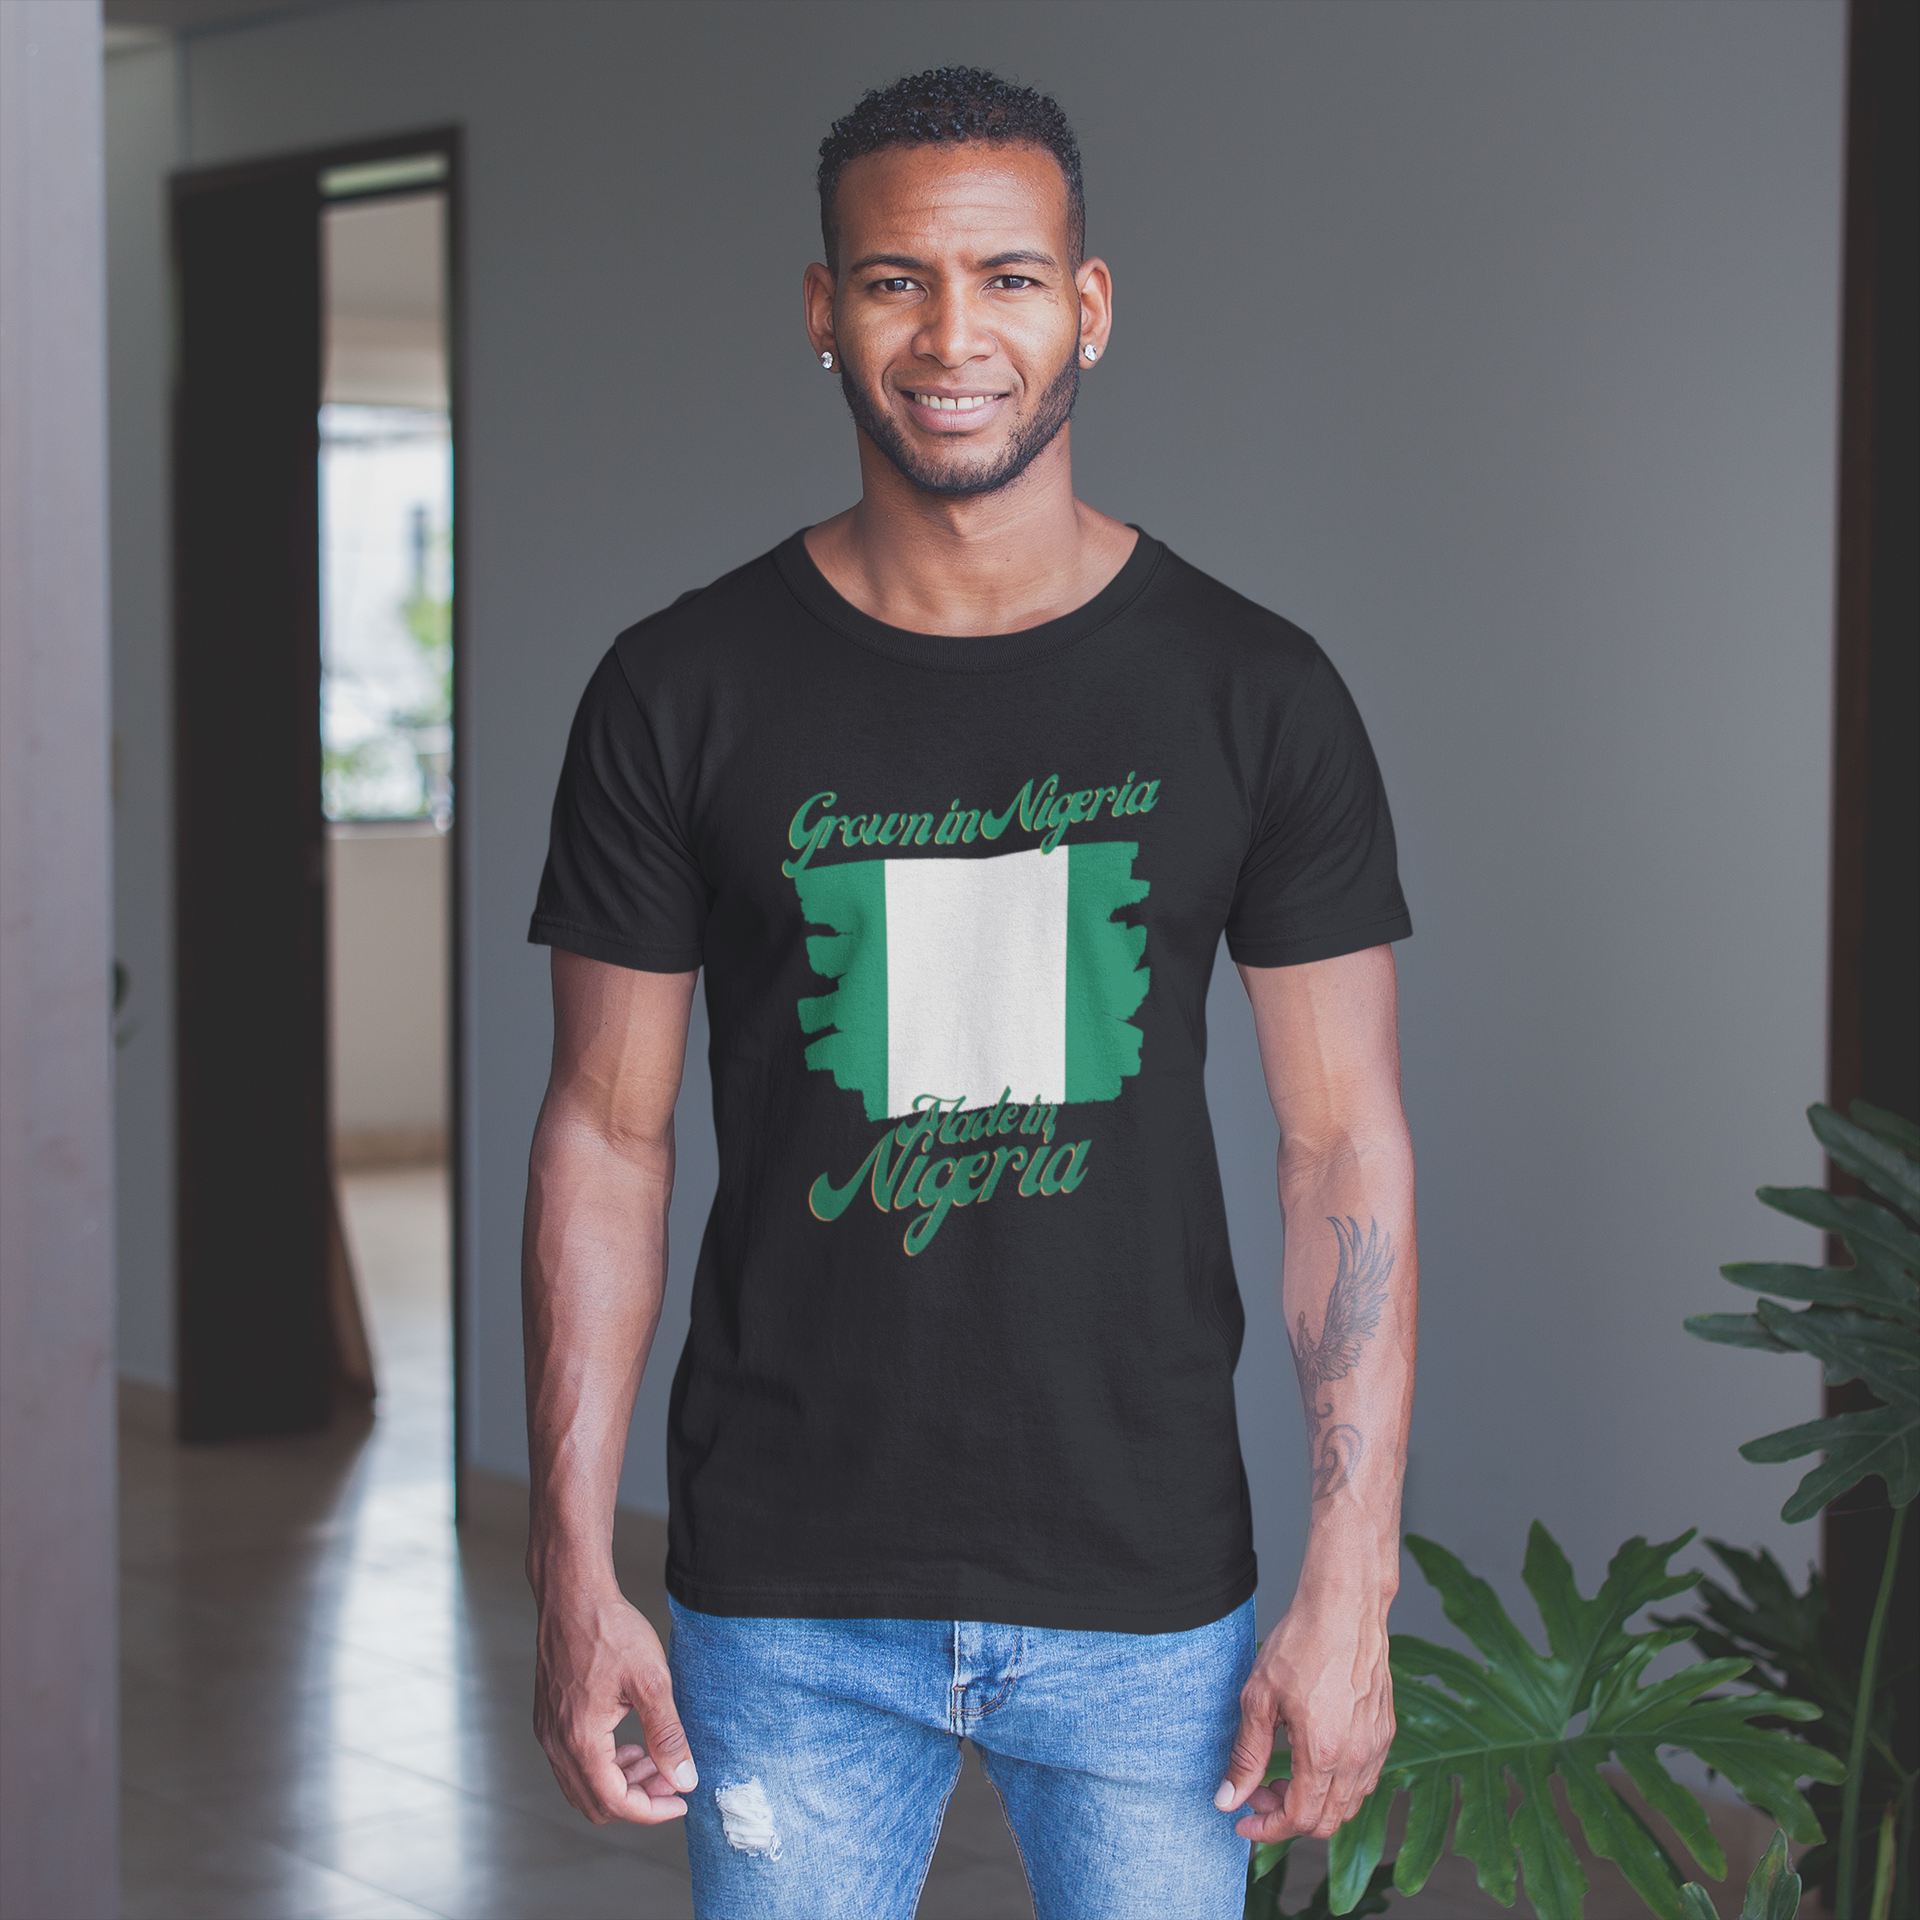 Grown in Nigeria Made in Nigeria Short-Sleeve Unisex T-Shirt